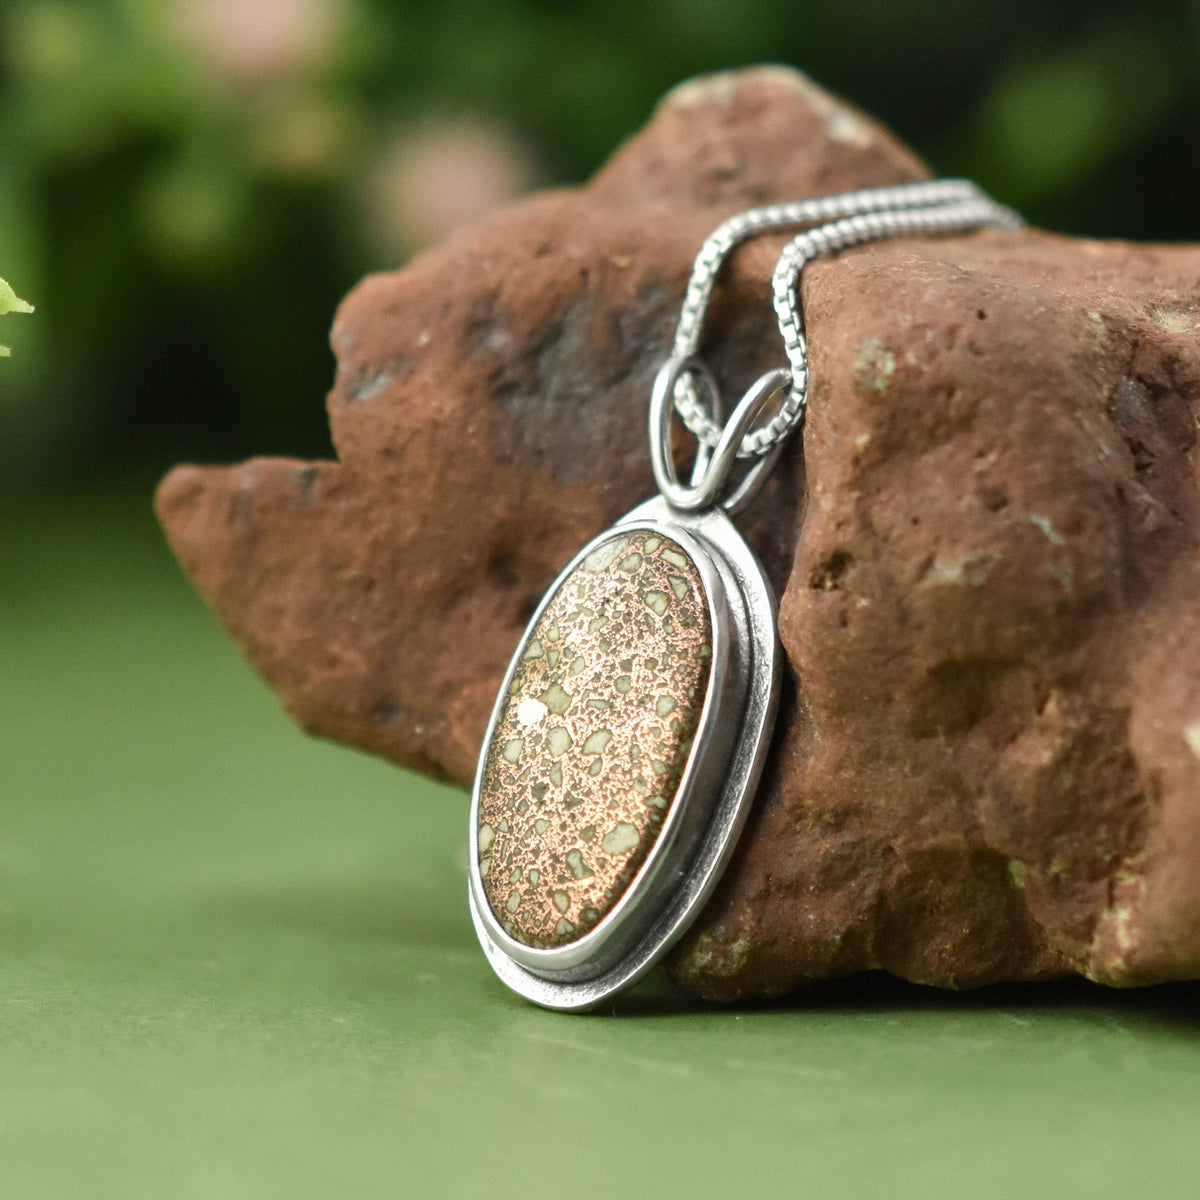 Copper Firebrick Drop Pendant No. 2 - Silver Pendant   7032 - handmade by Beth Millner Jewelry